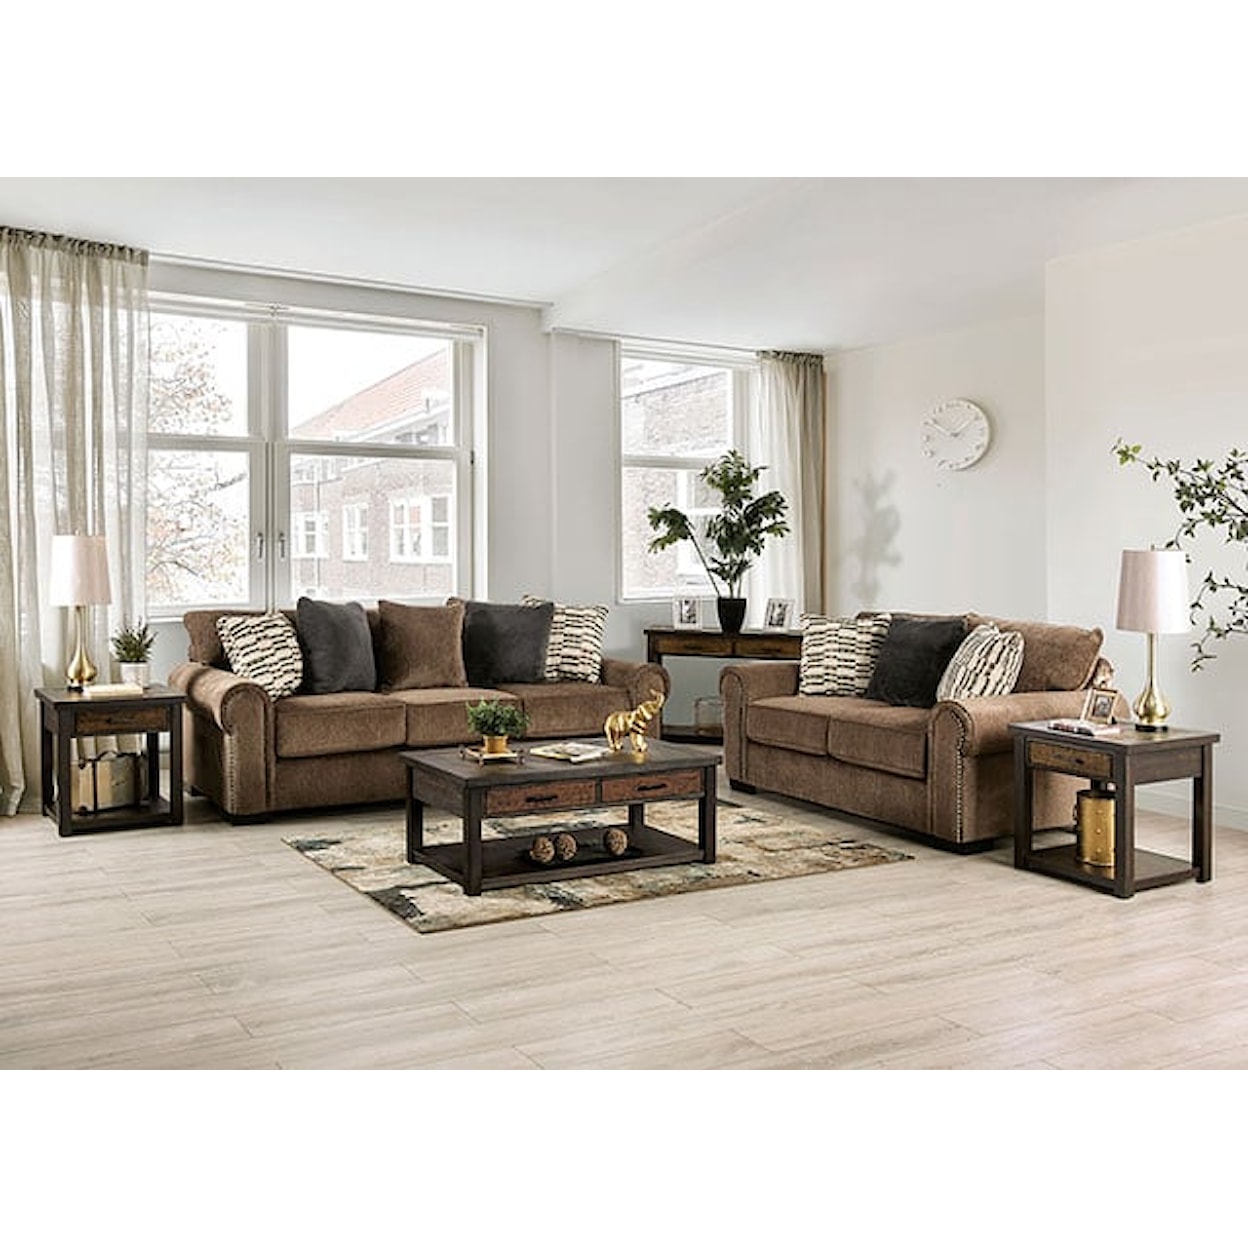 Furniture of America Laredo 2-Piece Living Room Set